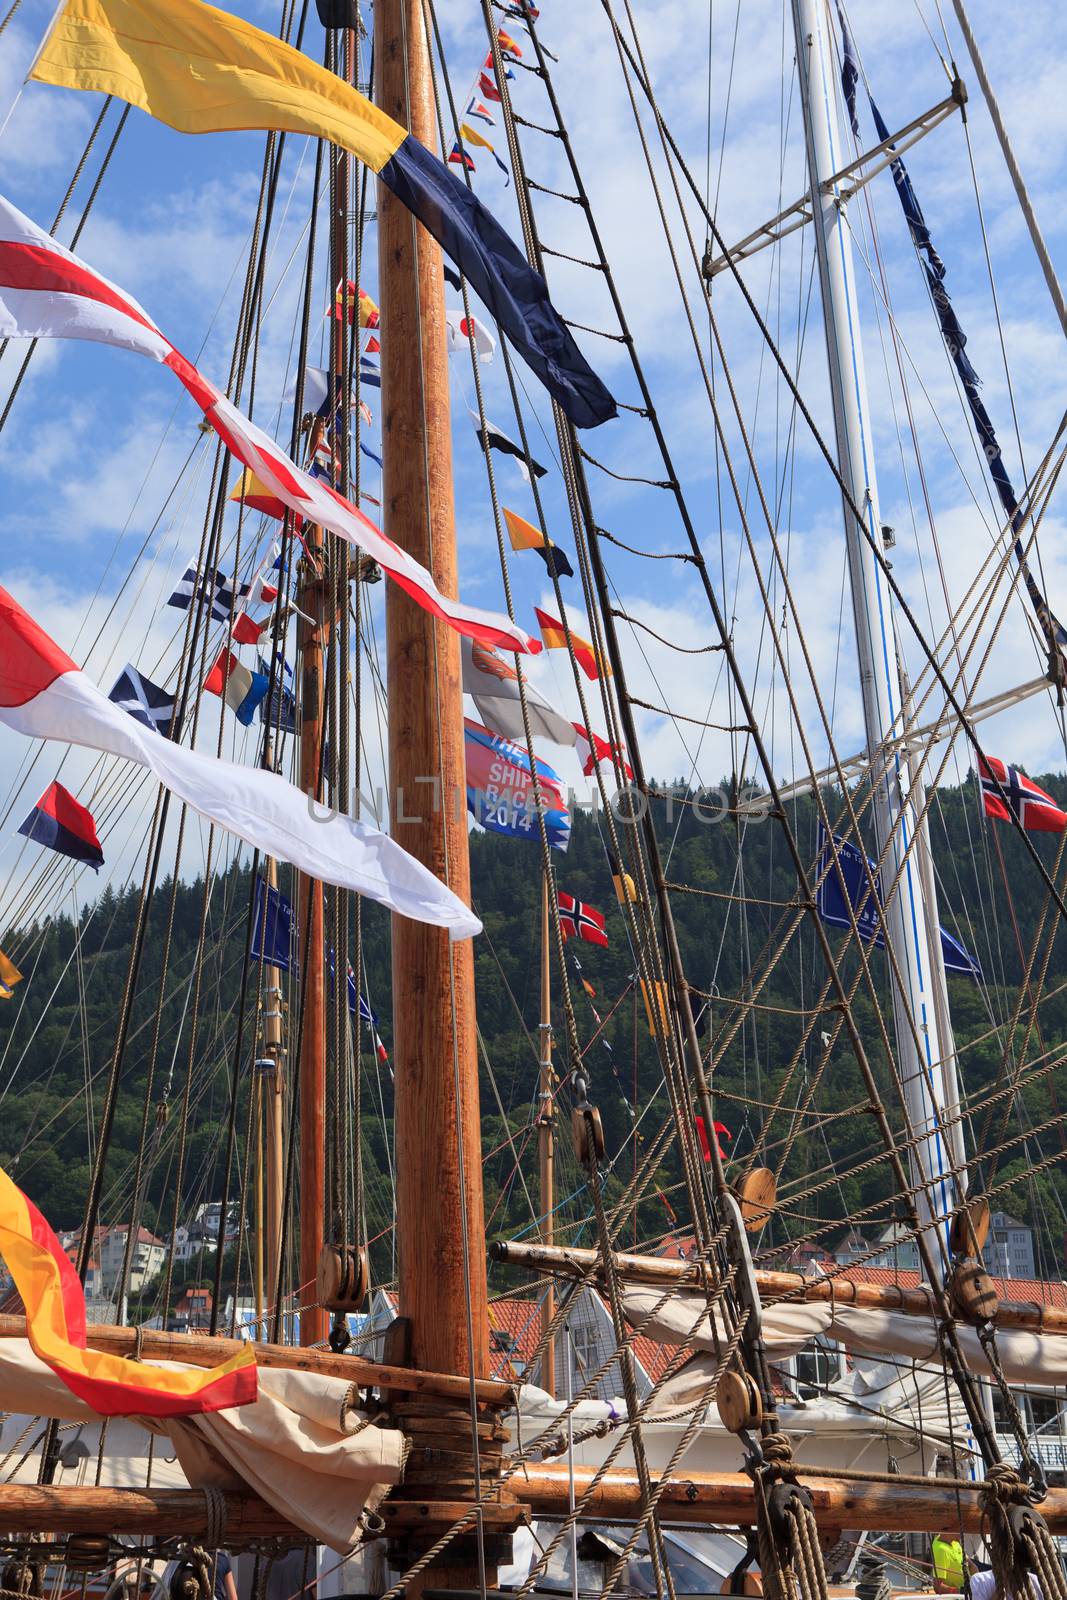 Tall Ship Races Bergen, Norway 2014